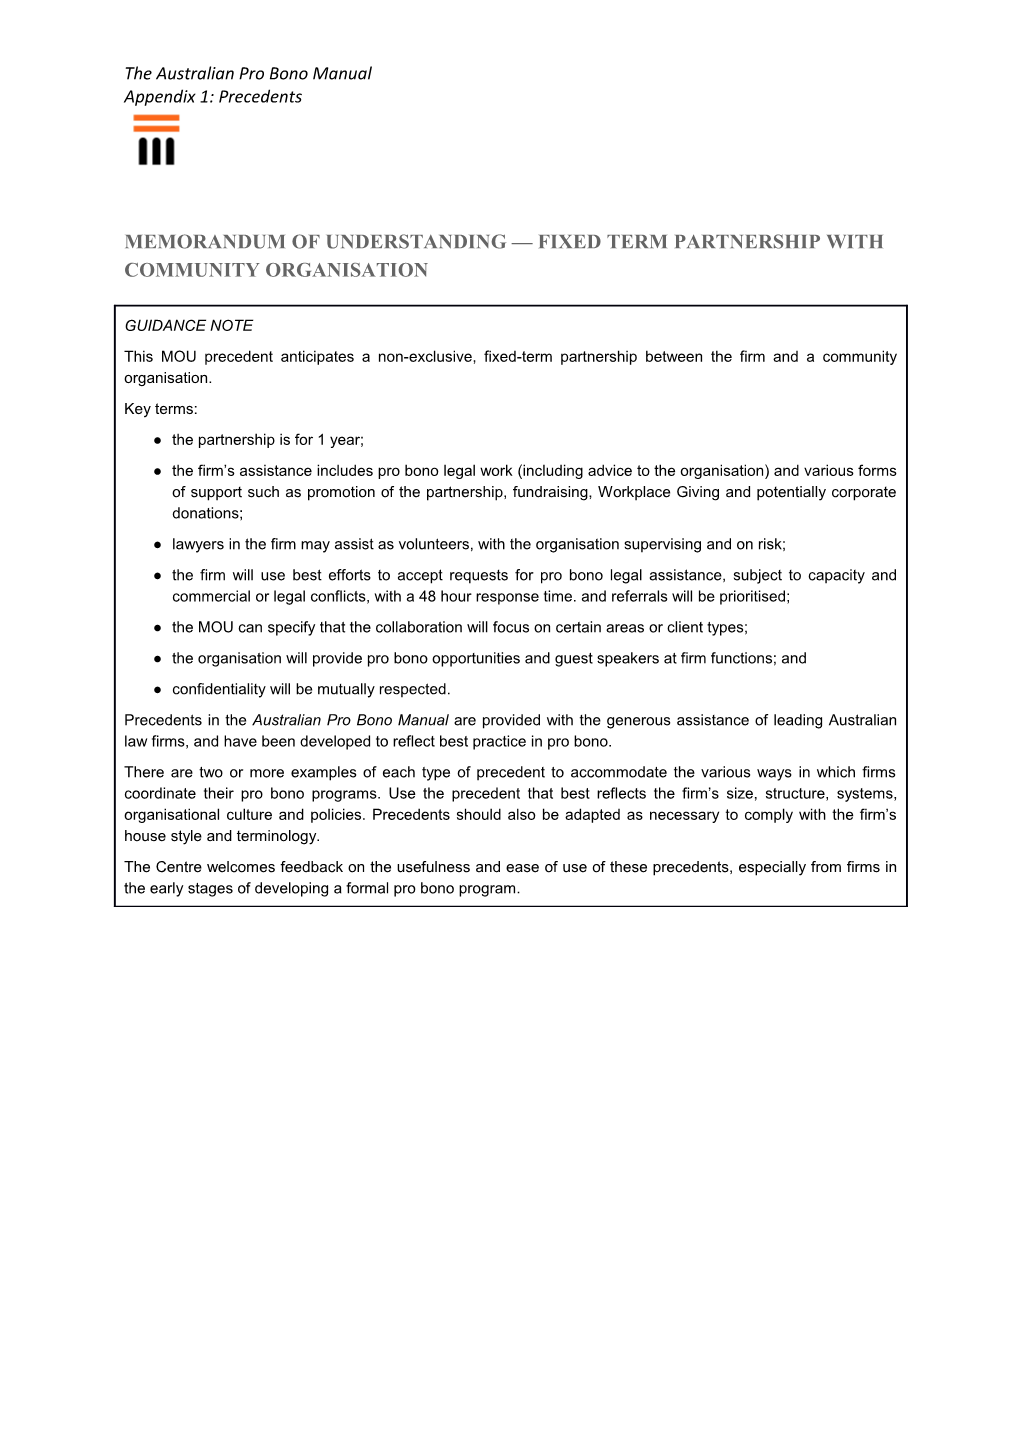 Memorandum of Understanding Fixed Term Partnership with Community Organisation